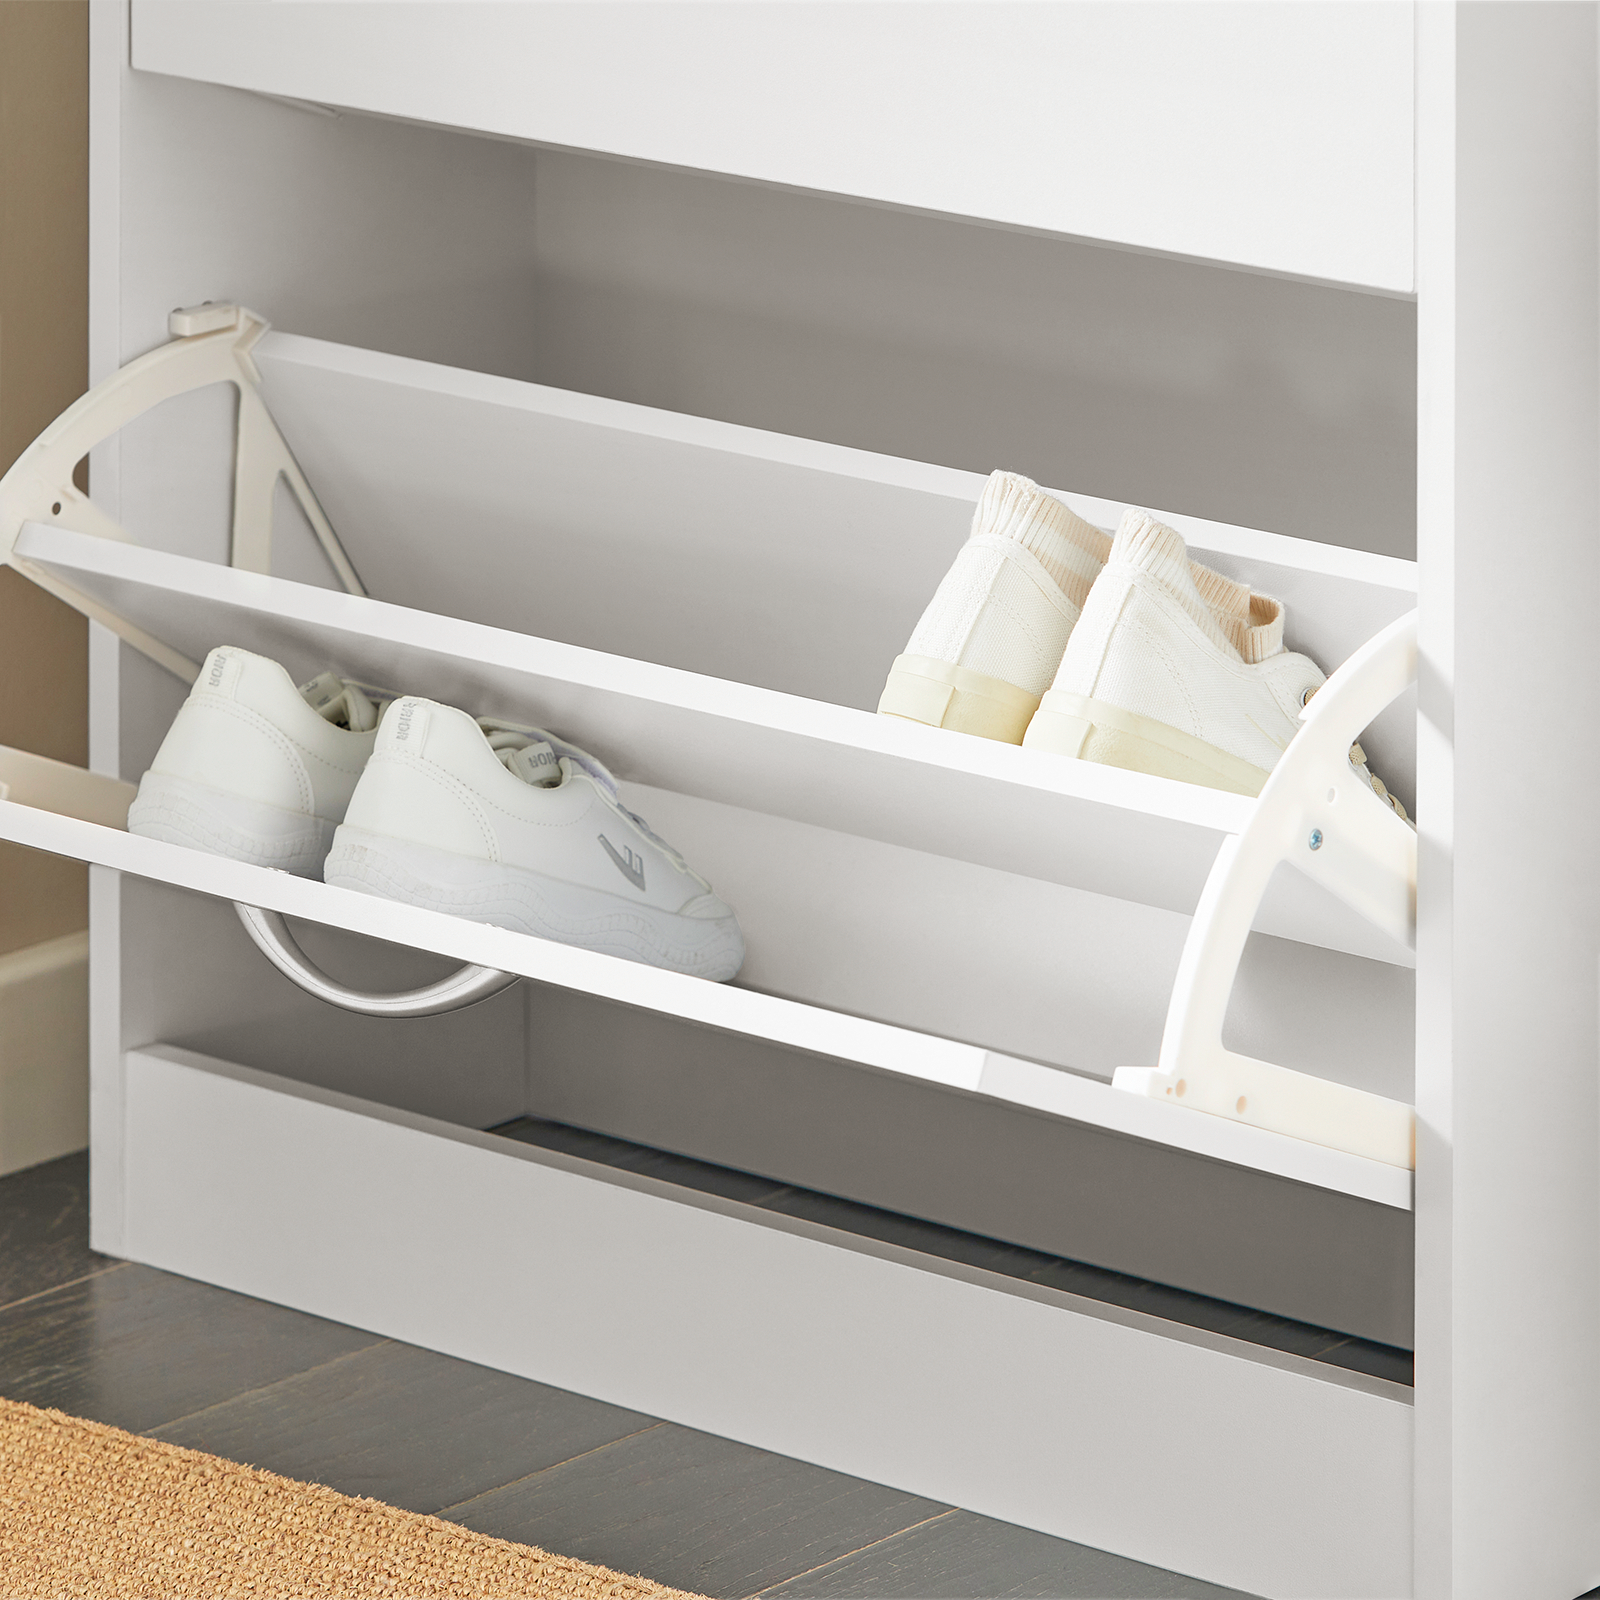 SoBuy FSR110-W,White Shoe Cabinet with 3 Flip Drawers, Freestanding Shoe Rack,Shoe StorageCupboard Organizer Unit